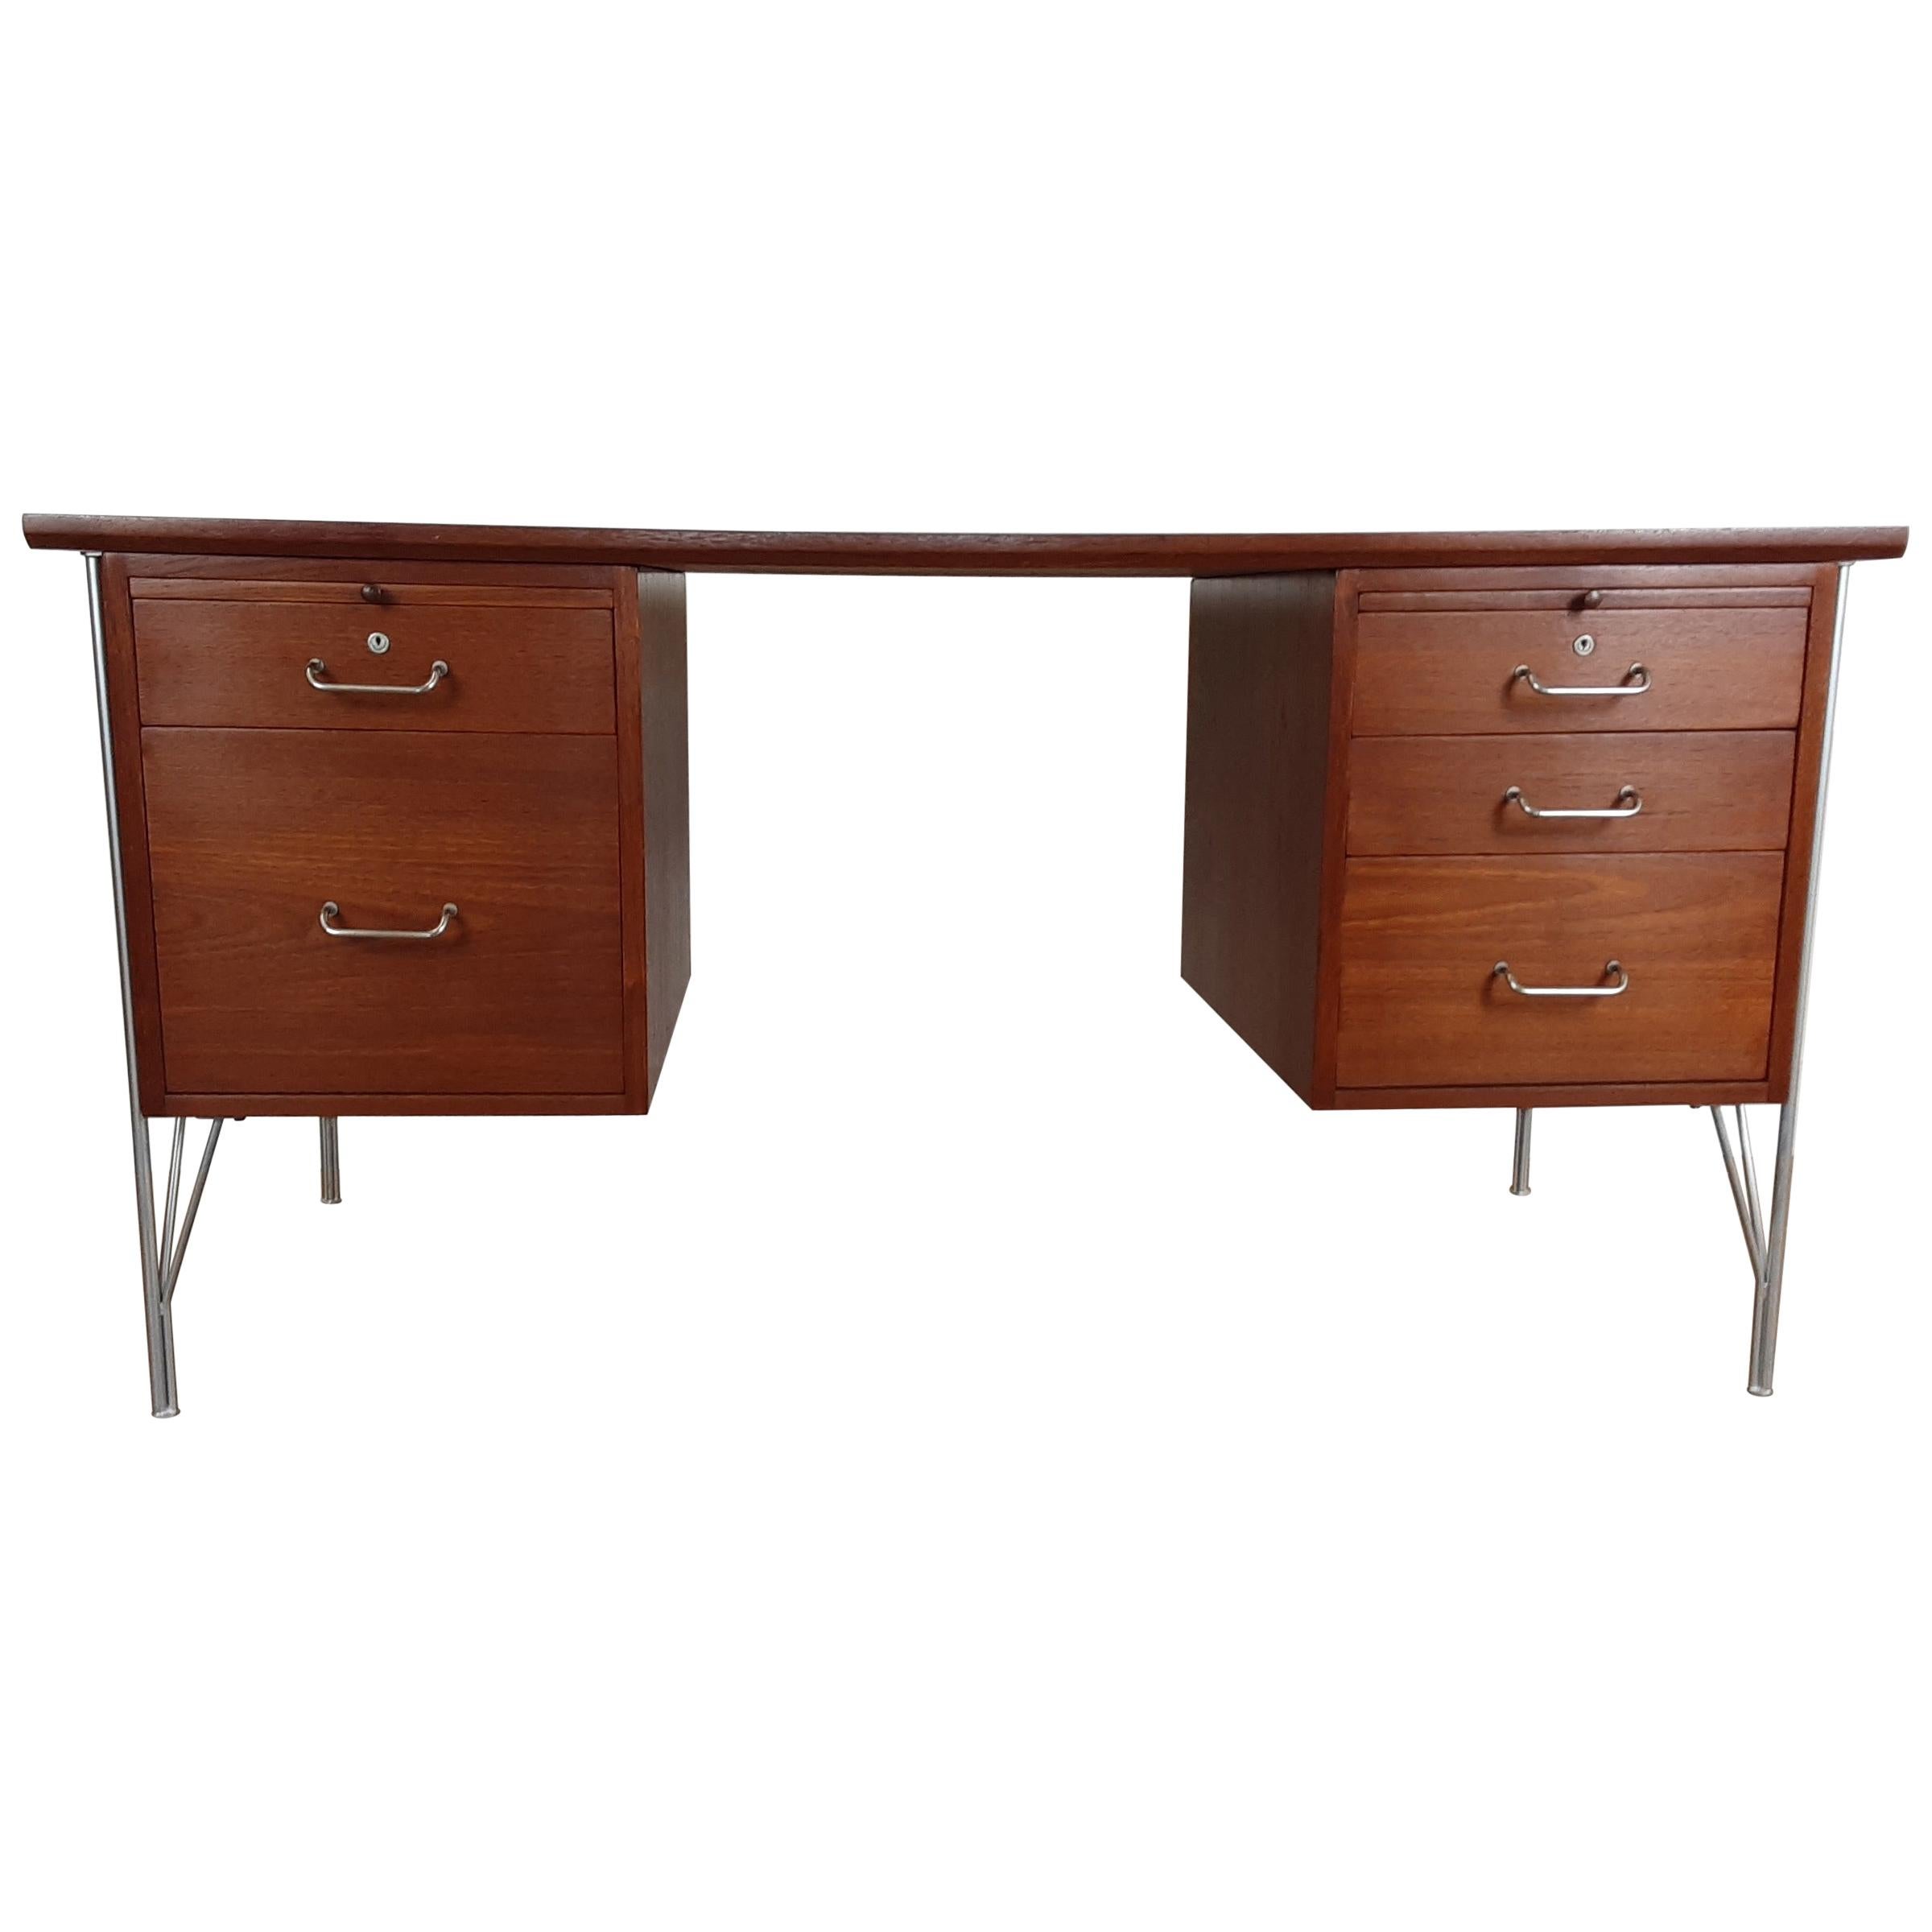 British Midcentury Teak Desk Designed by John and Sylvia Reid for Stag Furniture For Sale